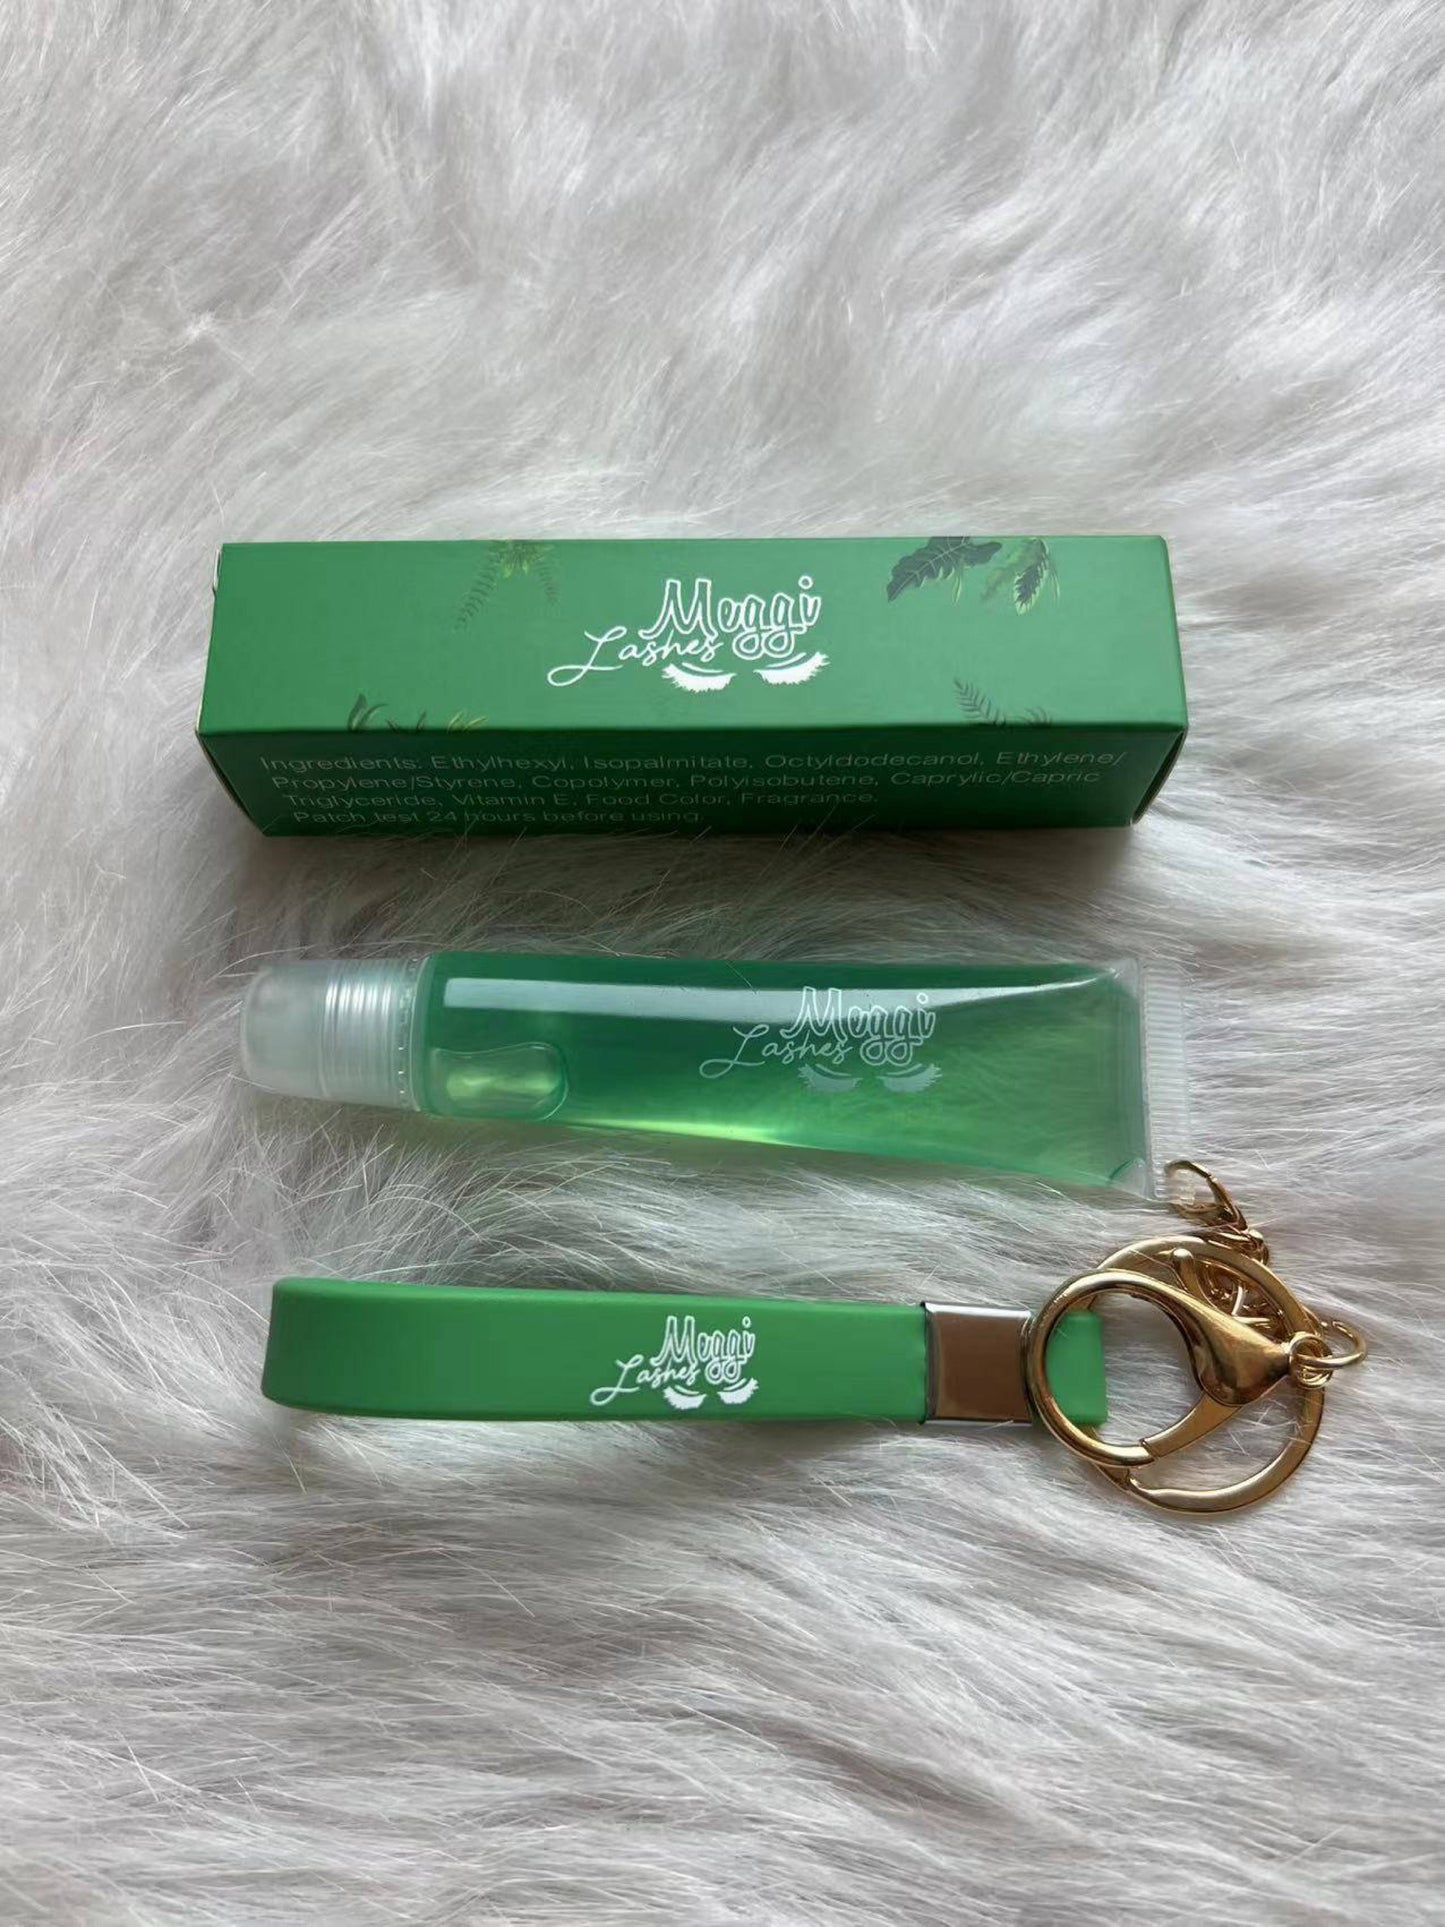 Green lipgloss keychain (Apple)